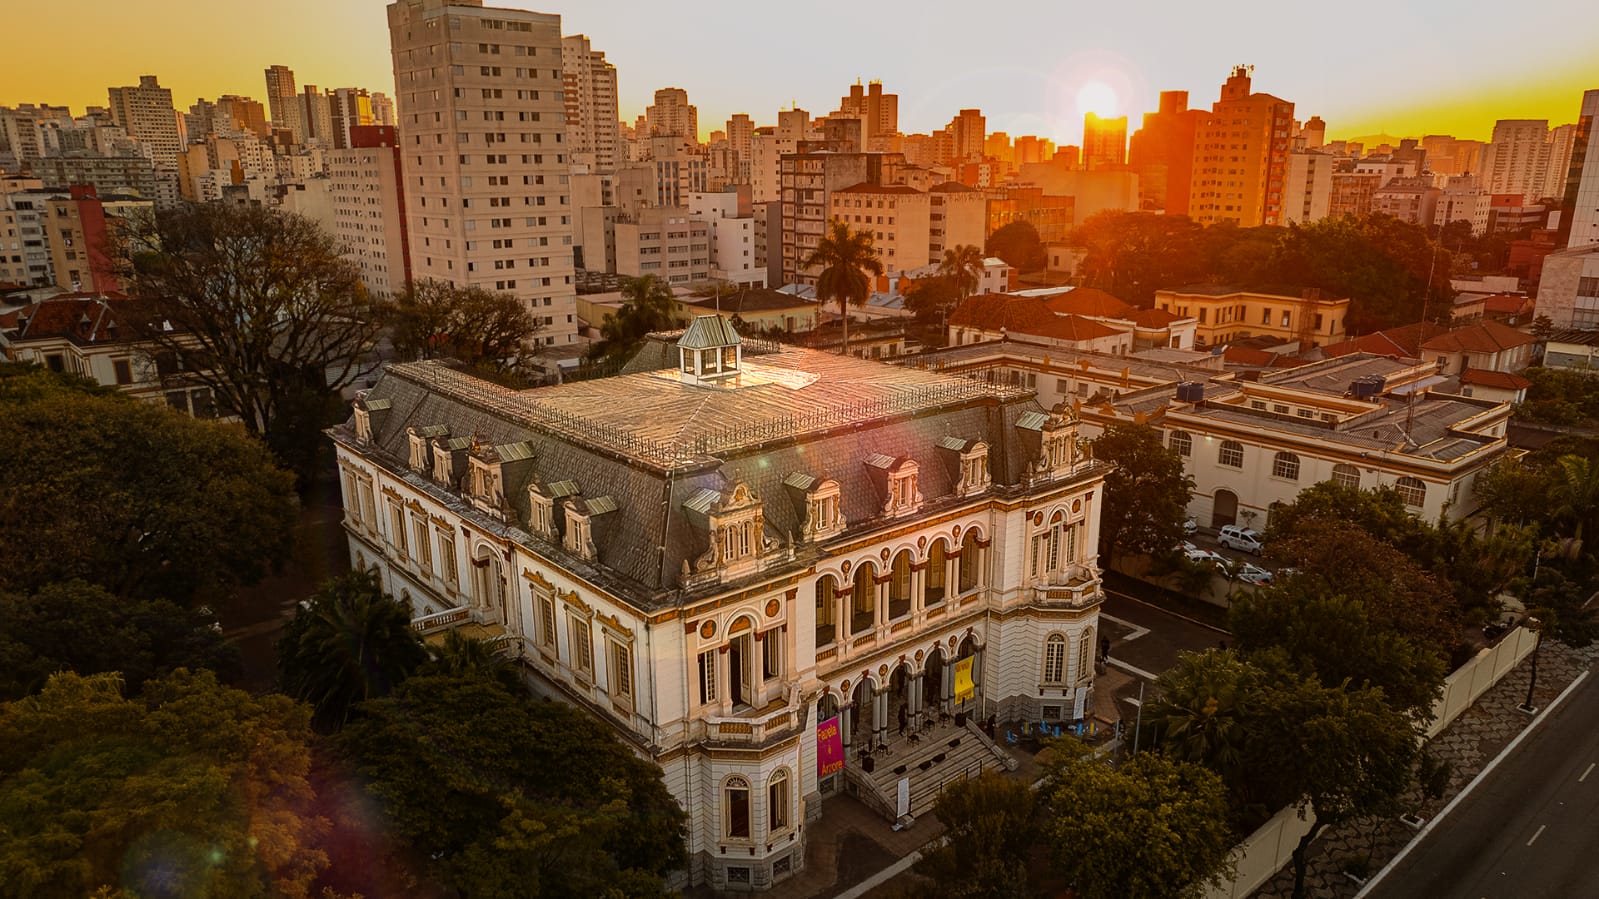 Museu das Favelas é aberto ao público no sábado, dia 26 de novembro, no Palácio dos Campos Elíseos